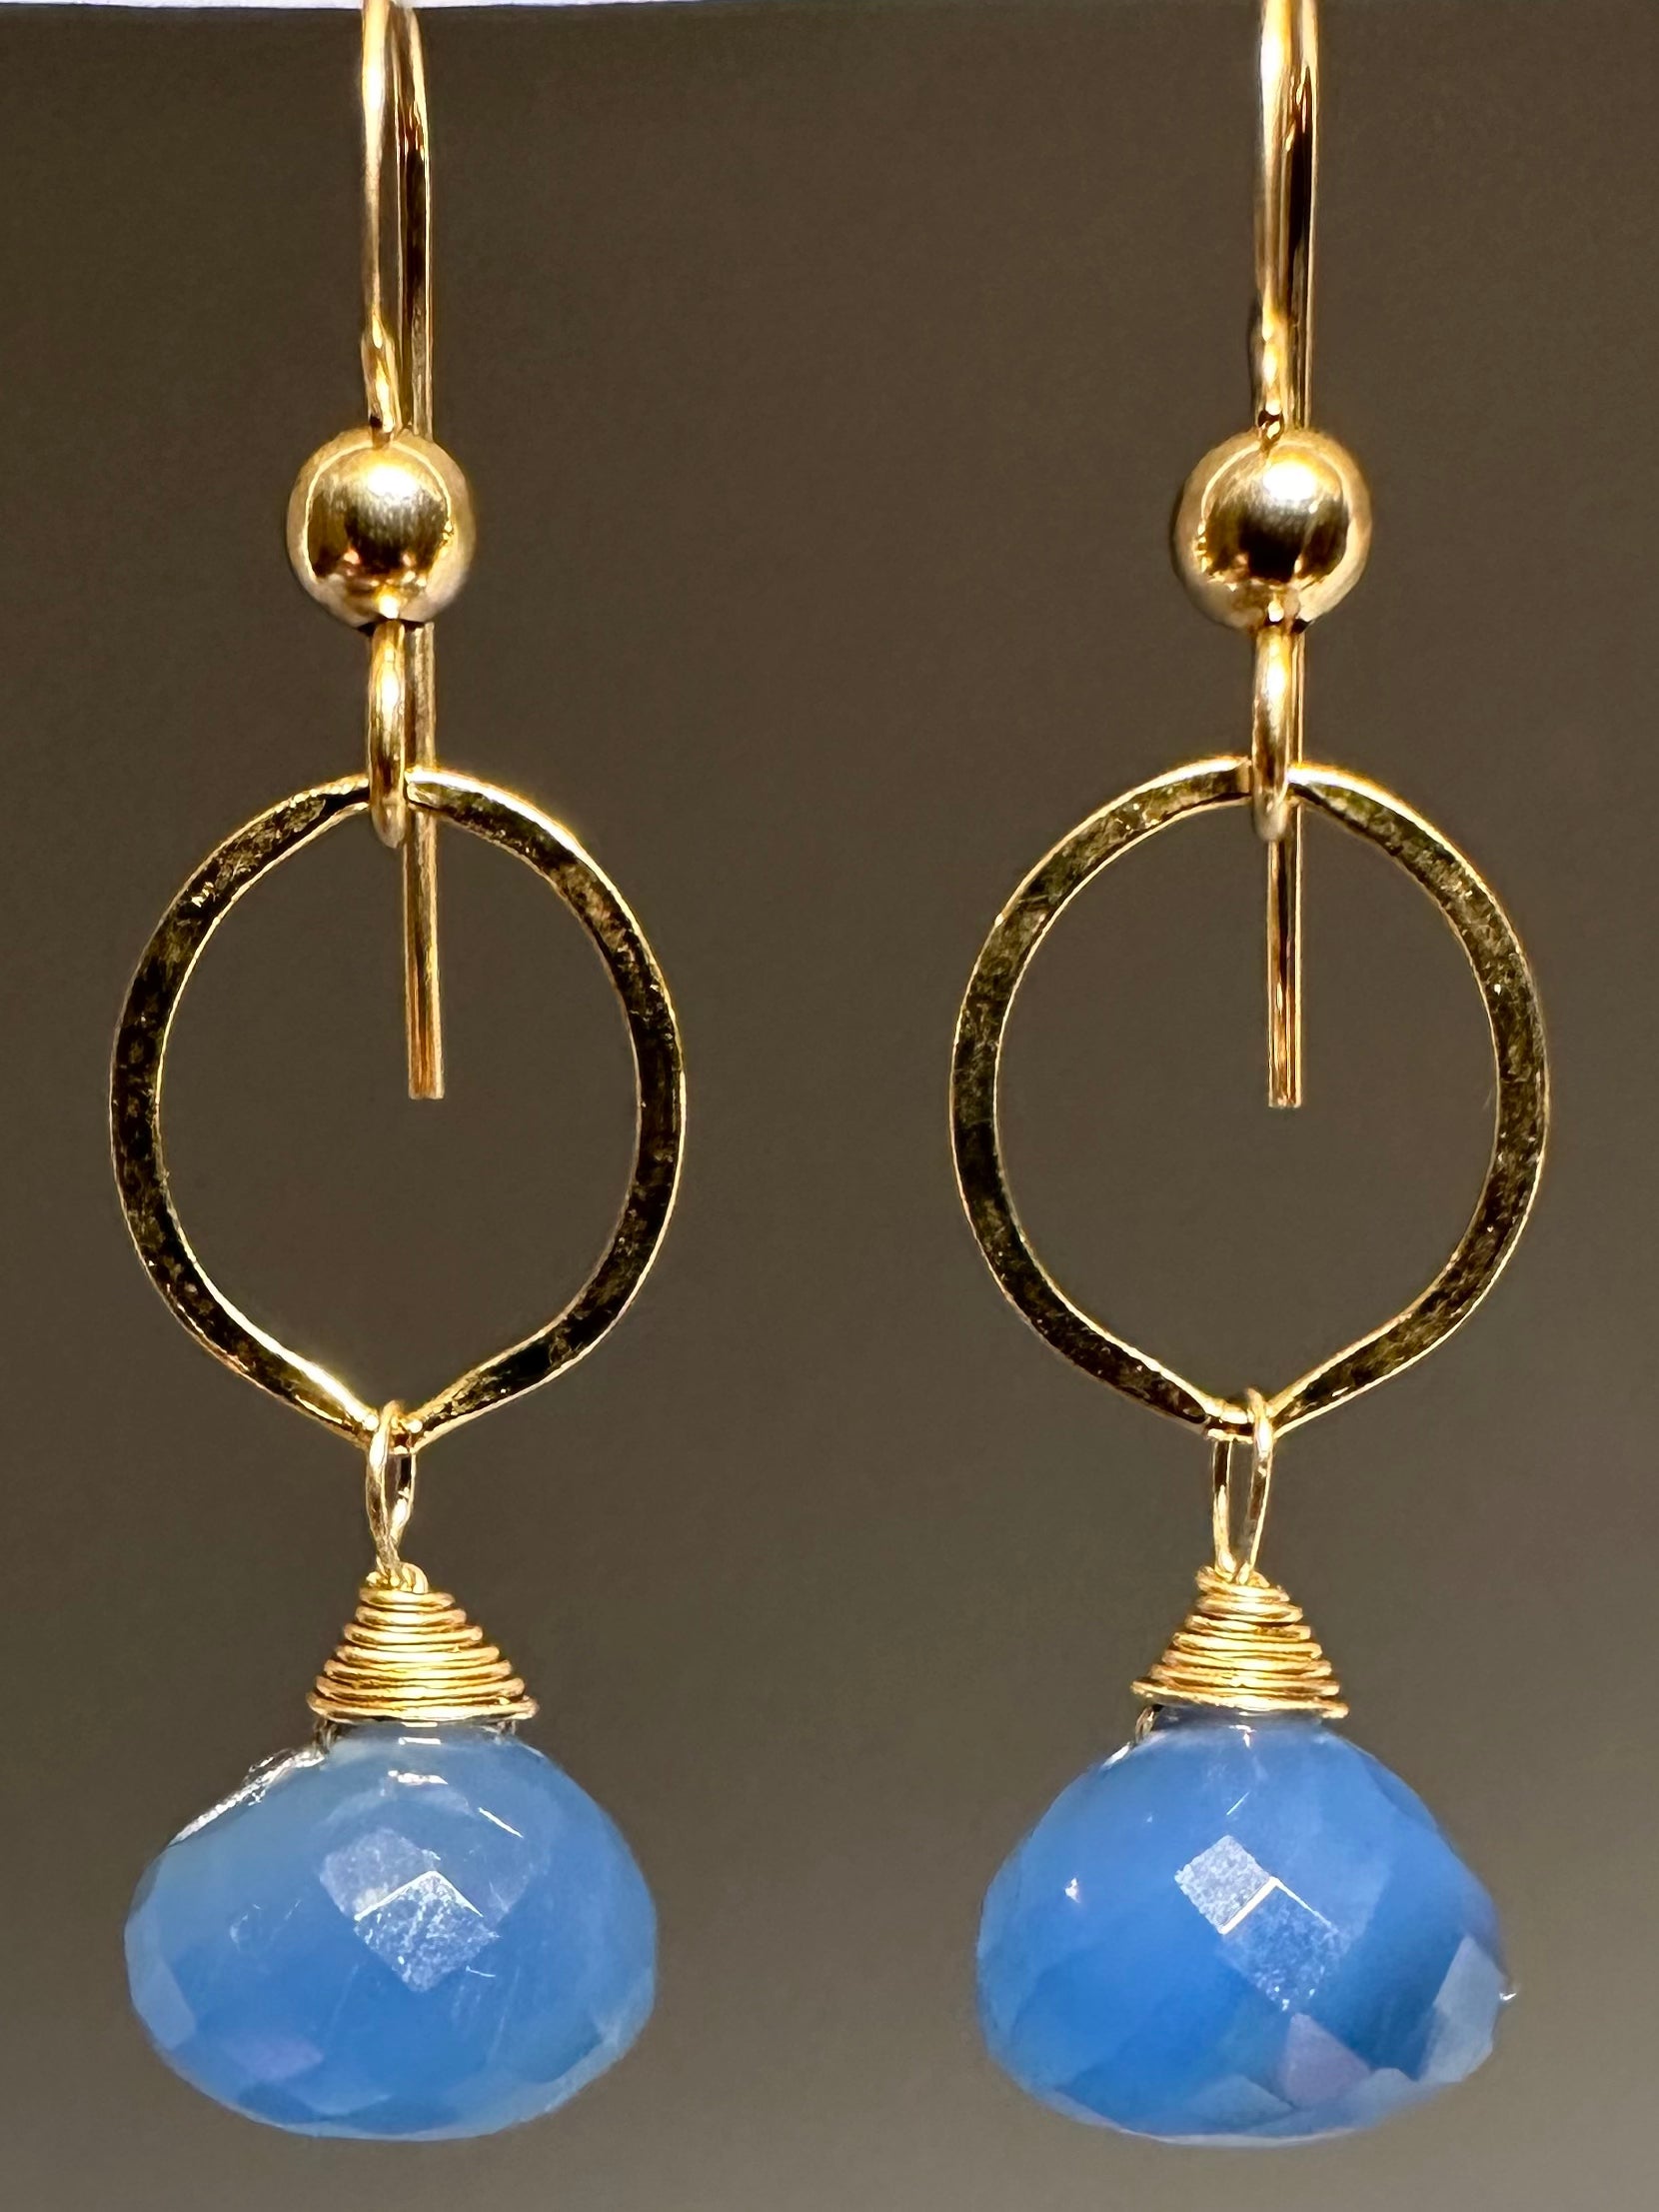 Pair of Blue Chalcedony Earrings